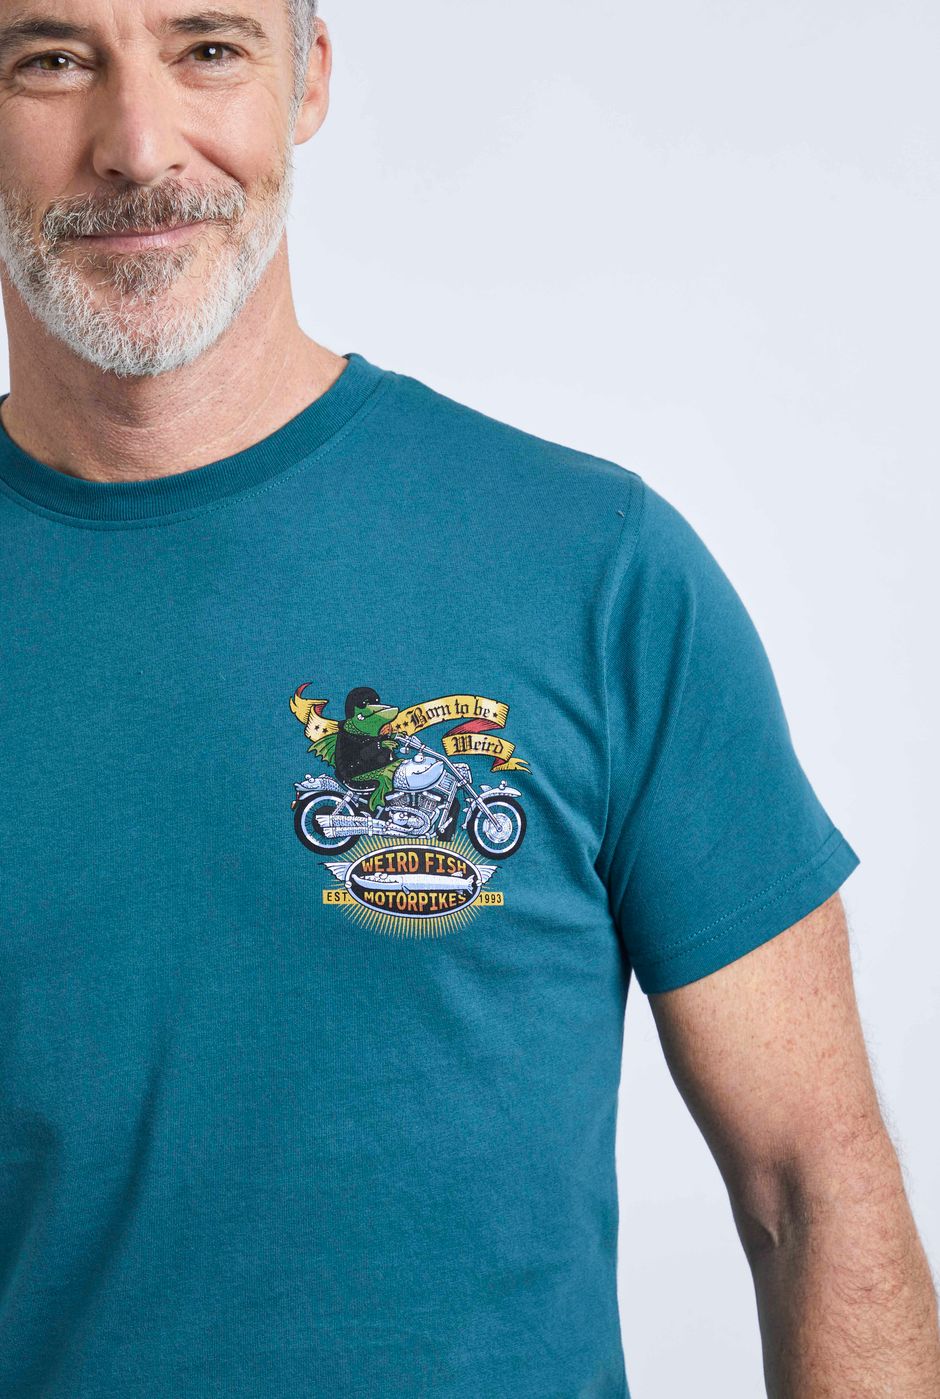 Motorpikes Organic Cotton Artist T-Shirt Petrol Blue